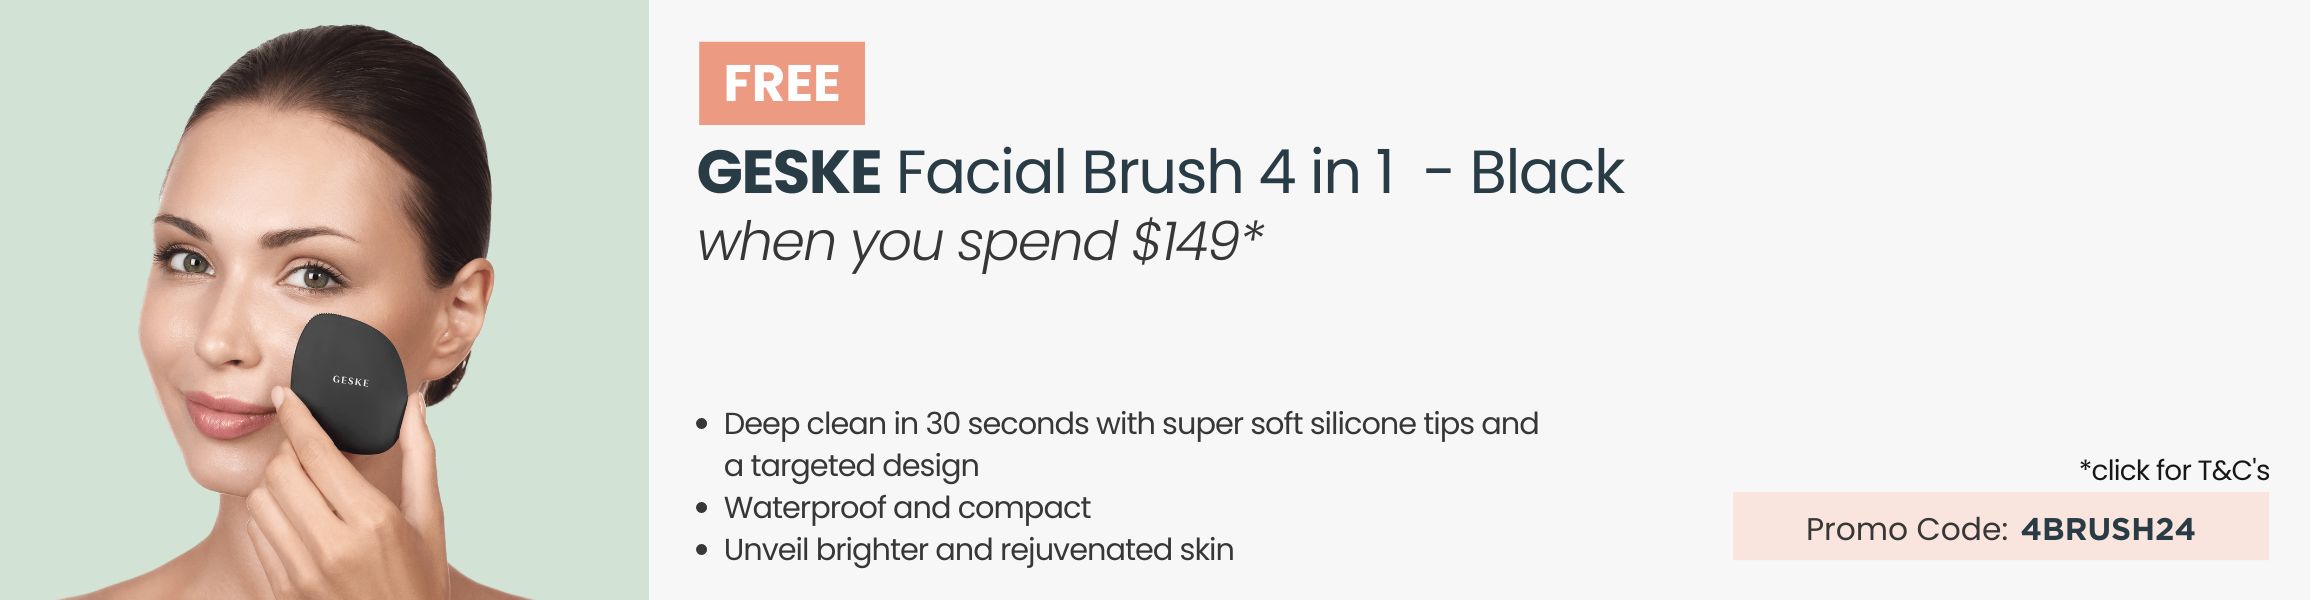 FREE Geske 4 in 1 Facial Brush. Min spend $149. Promo Code 4BRUSH24